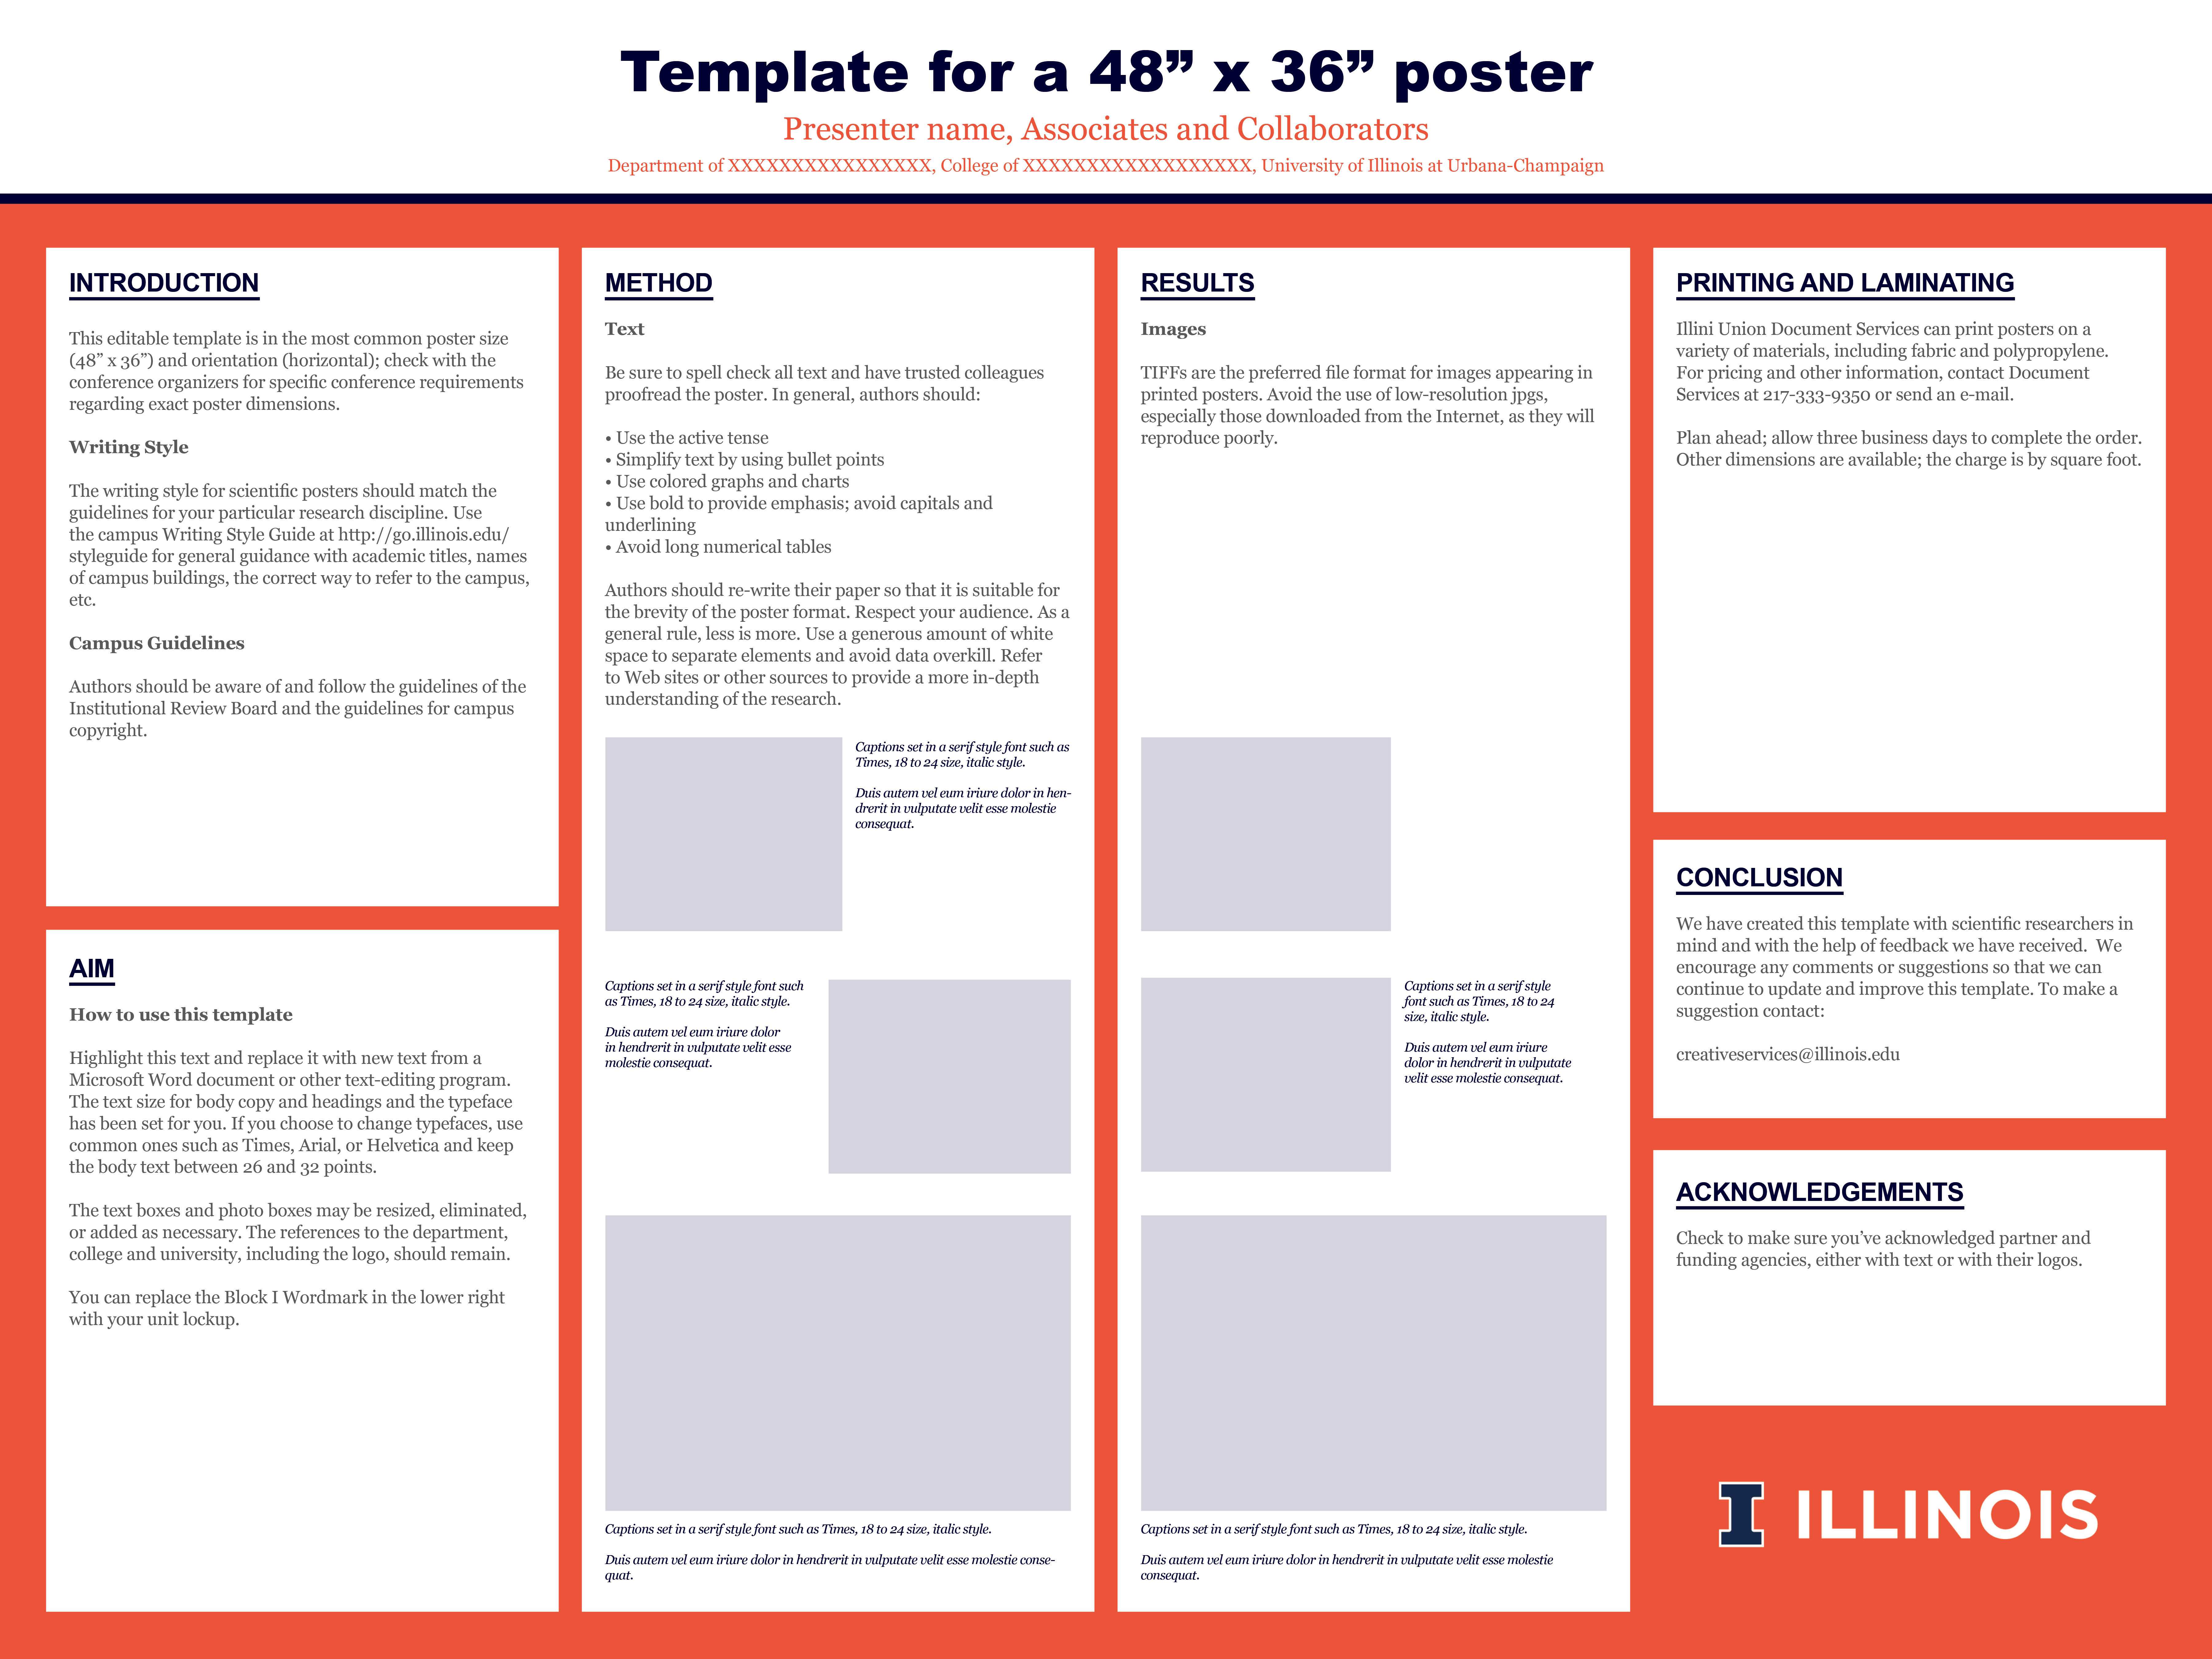 Research Poster | Campus Templates | Public Affairs | Illinois Regarding Powerpoint Presentation Template Size